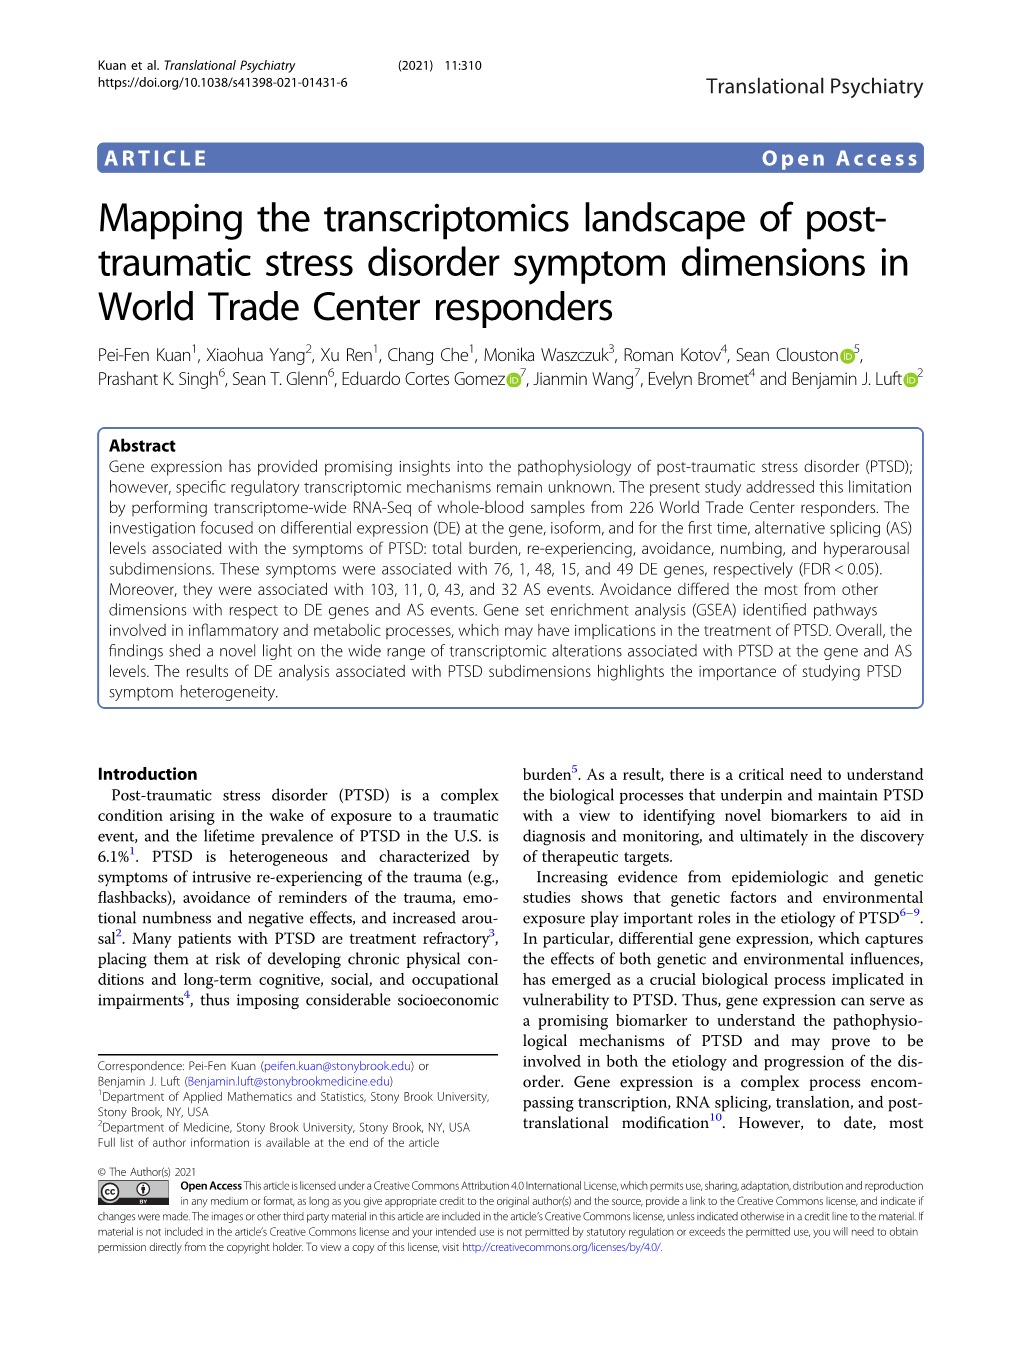 Mapping the Transcriptomics Landscape of Post-Traumatic Stress